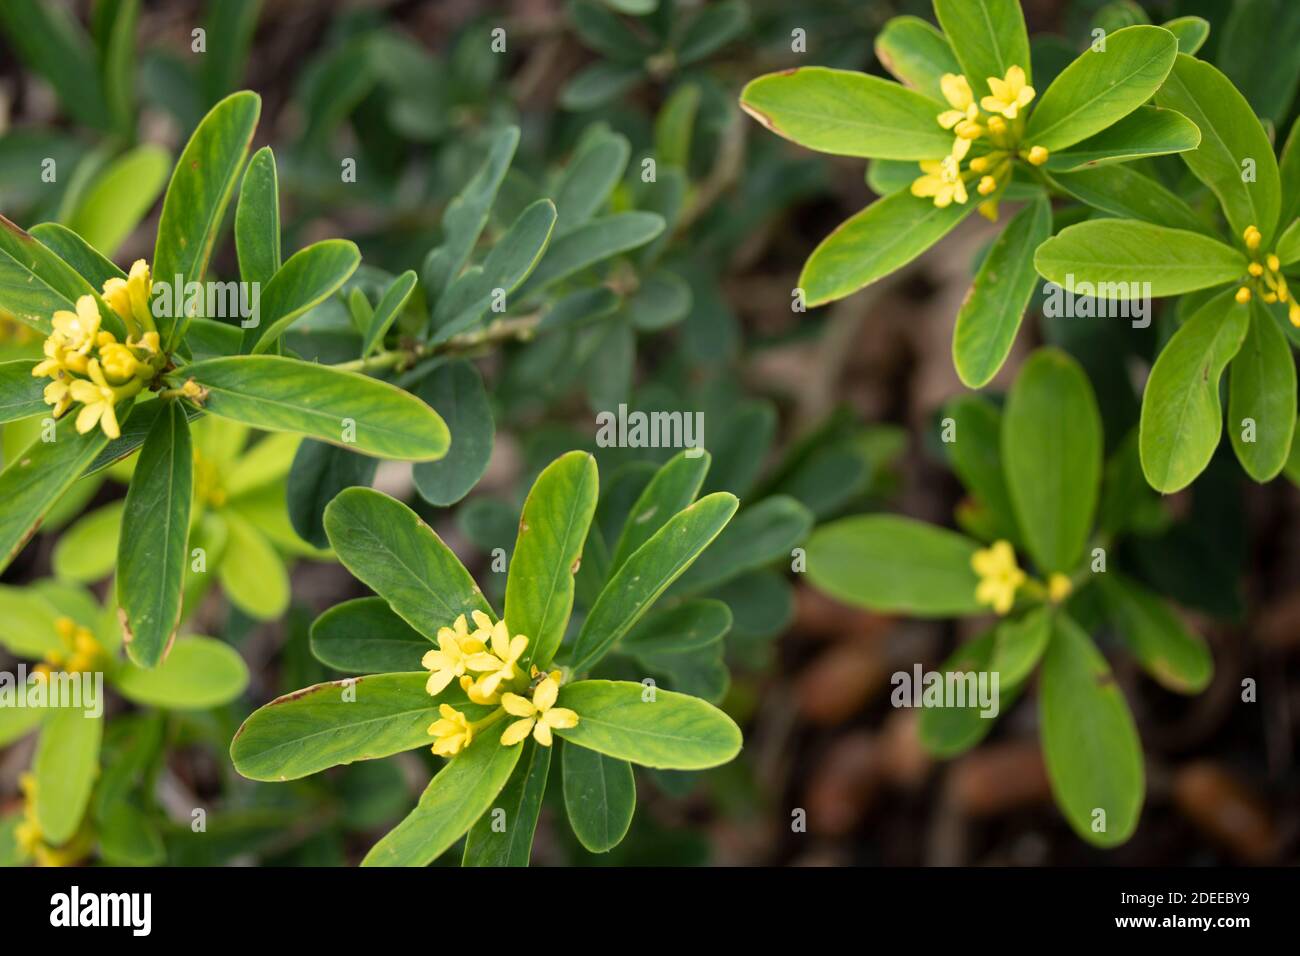 Daphne Gemmata ‘Royal Crown’ shrub showing yellow flowers, natural plant portrait Stock Photo